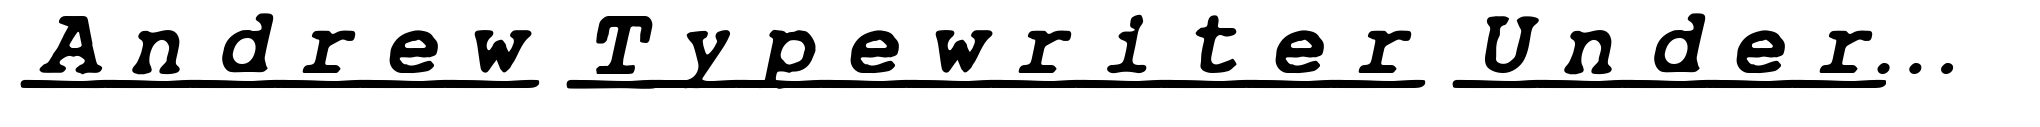 Andrew Typewriter Underline Italic image